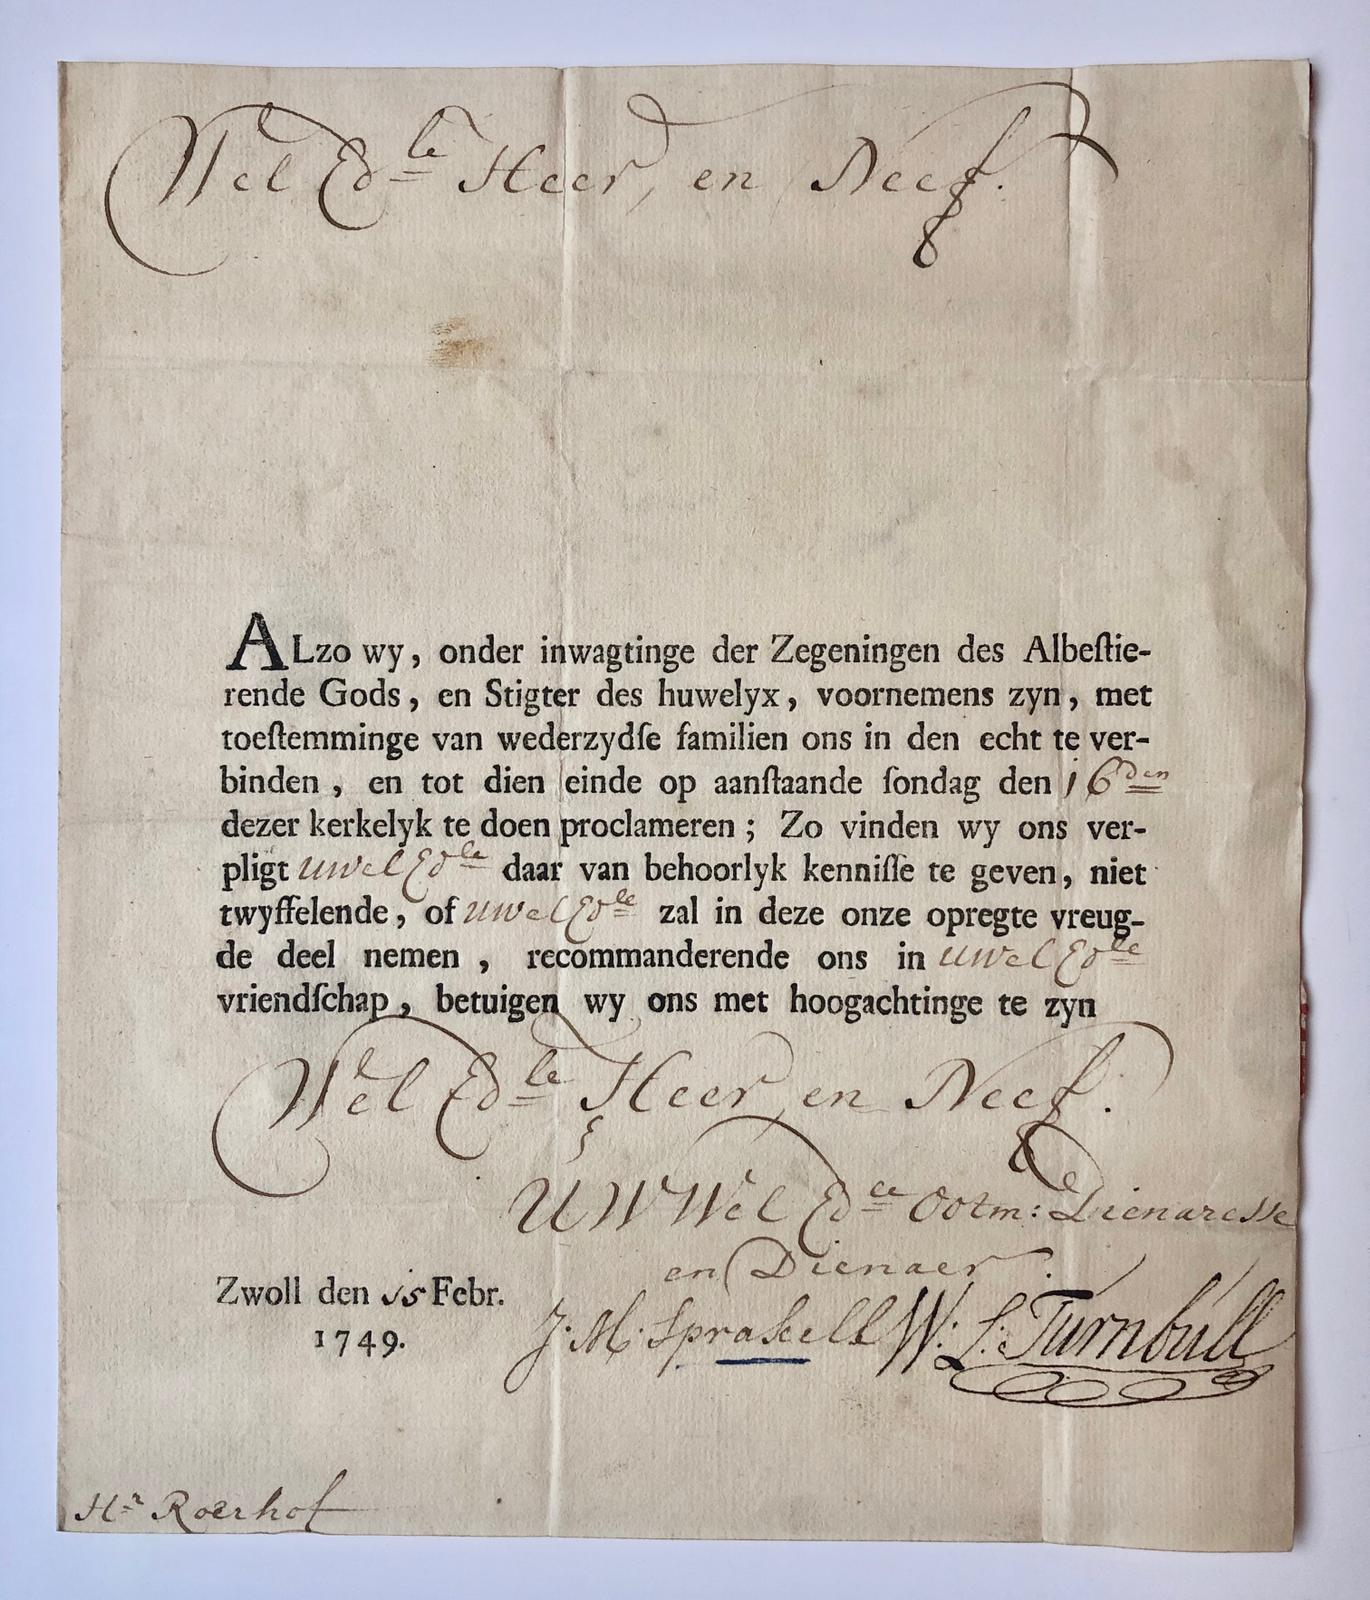  - [Marriage manuscript announcement 1749] Aankondiging van het huwelijk van J.M. Sprakell en W.L. Turnbull, Zwolle 15-2-1749. Deels gedrukt, 4, 1 pag.